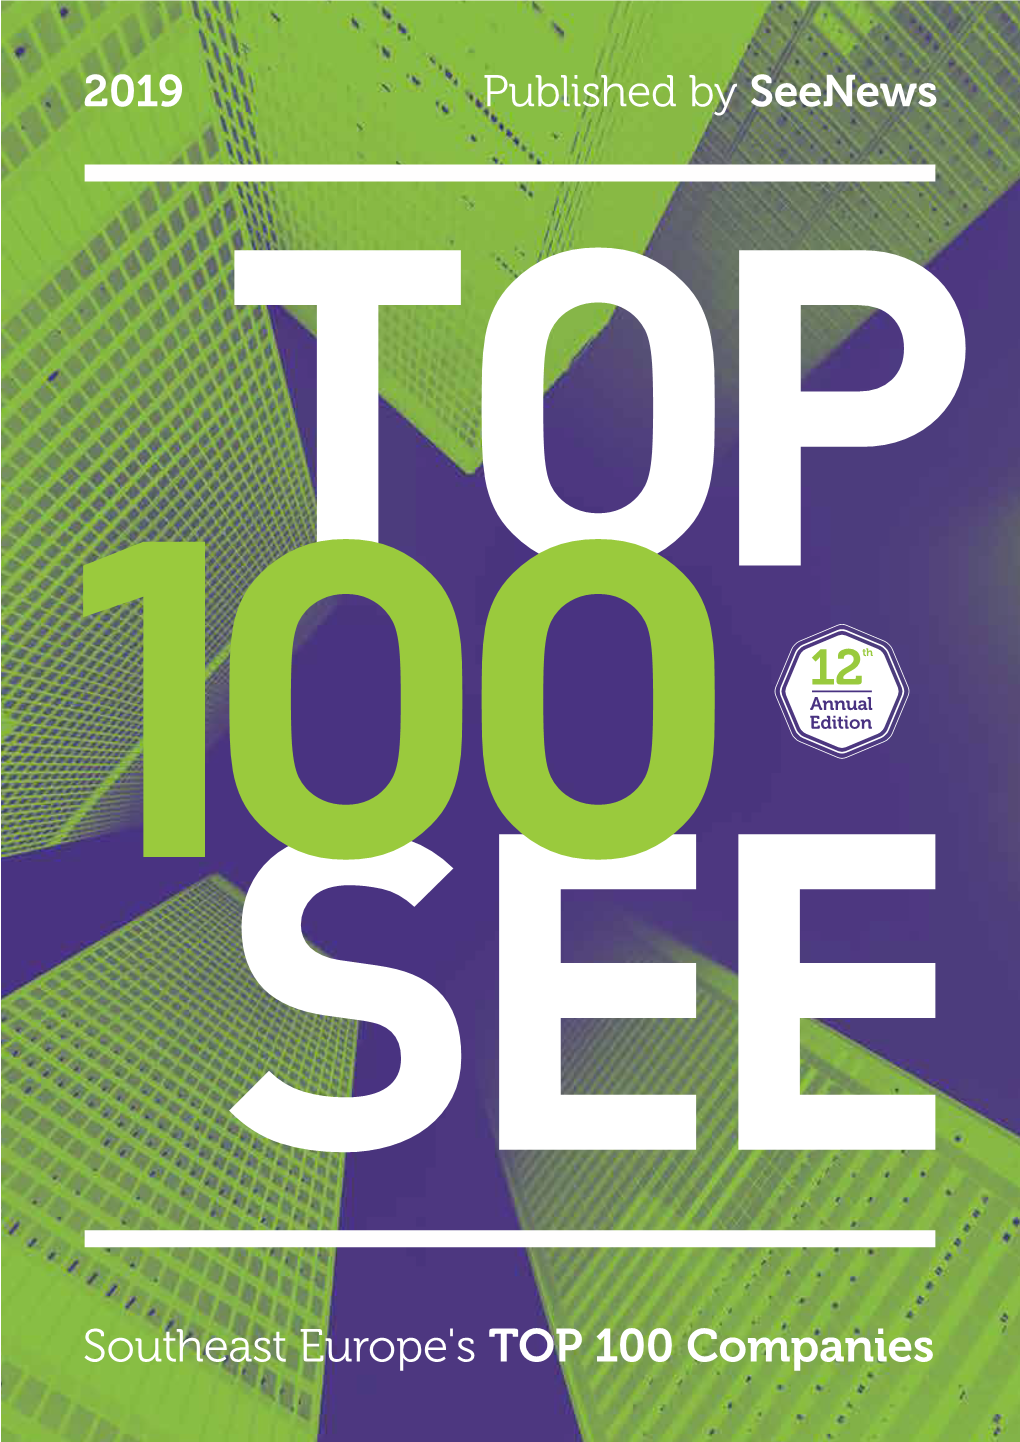 Southeast Europe's TOP 100 Companies Reklama Tek SEE News 2019-1.Pdf 1 28/08/2019 5:15:22 PM